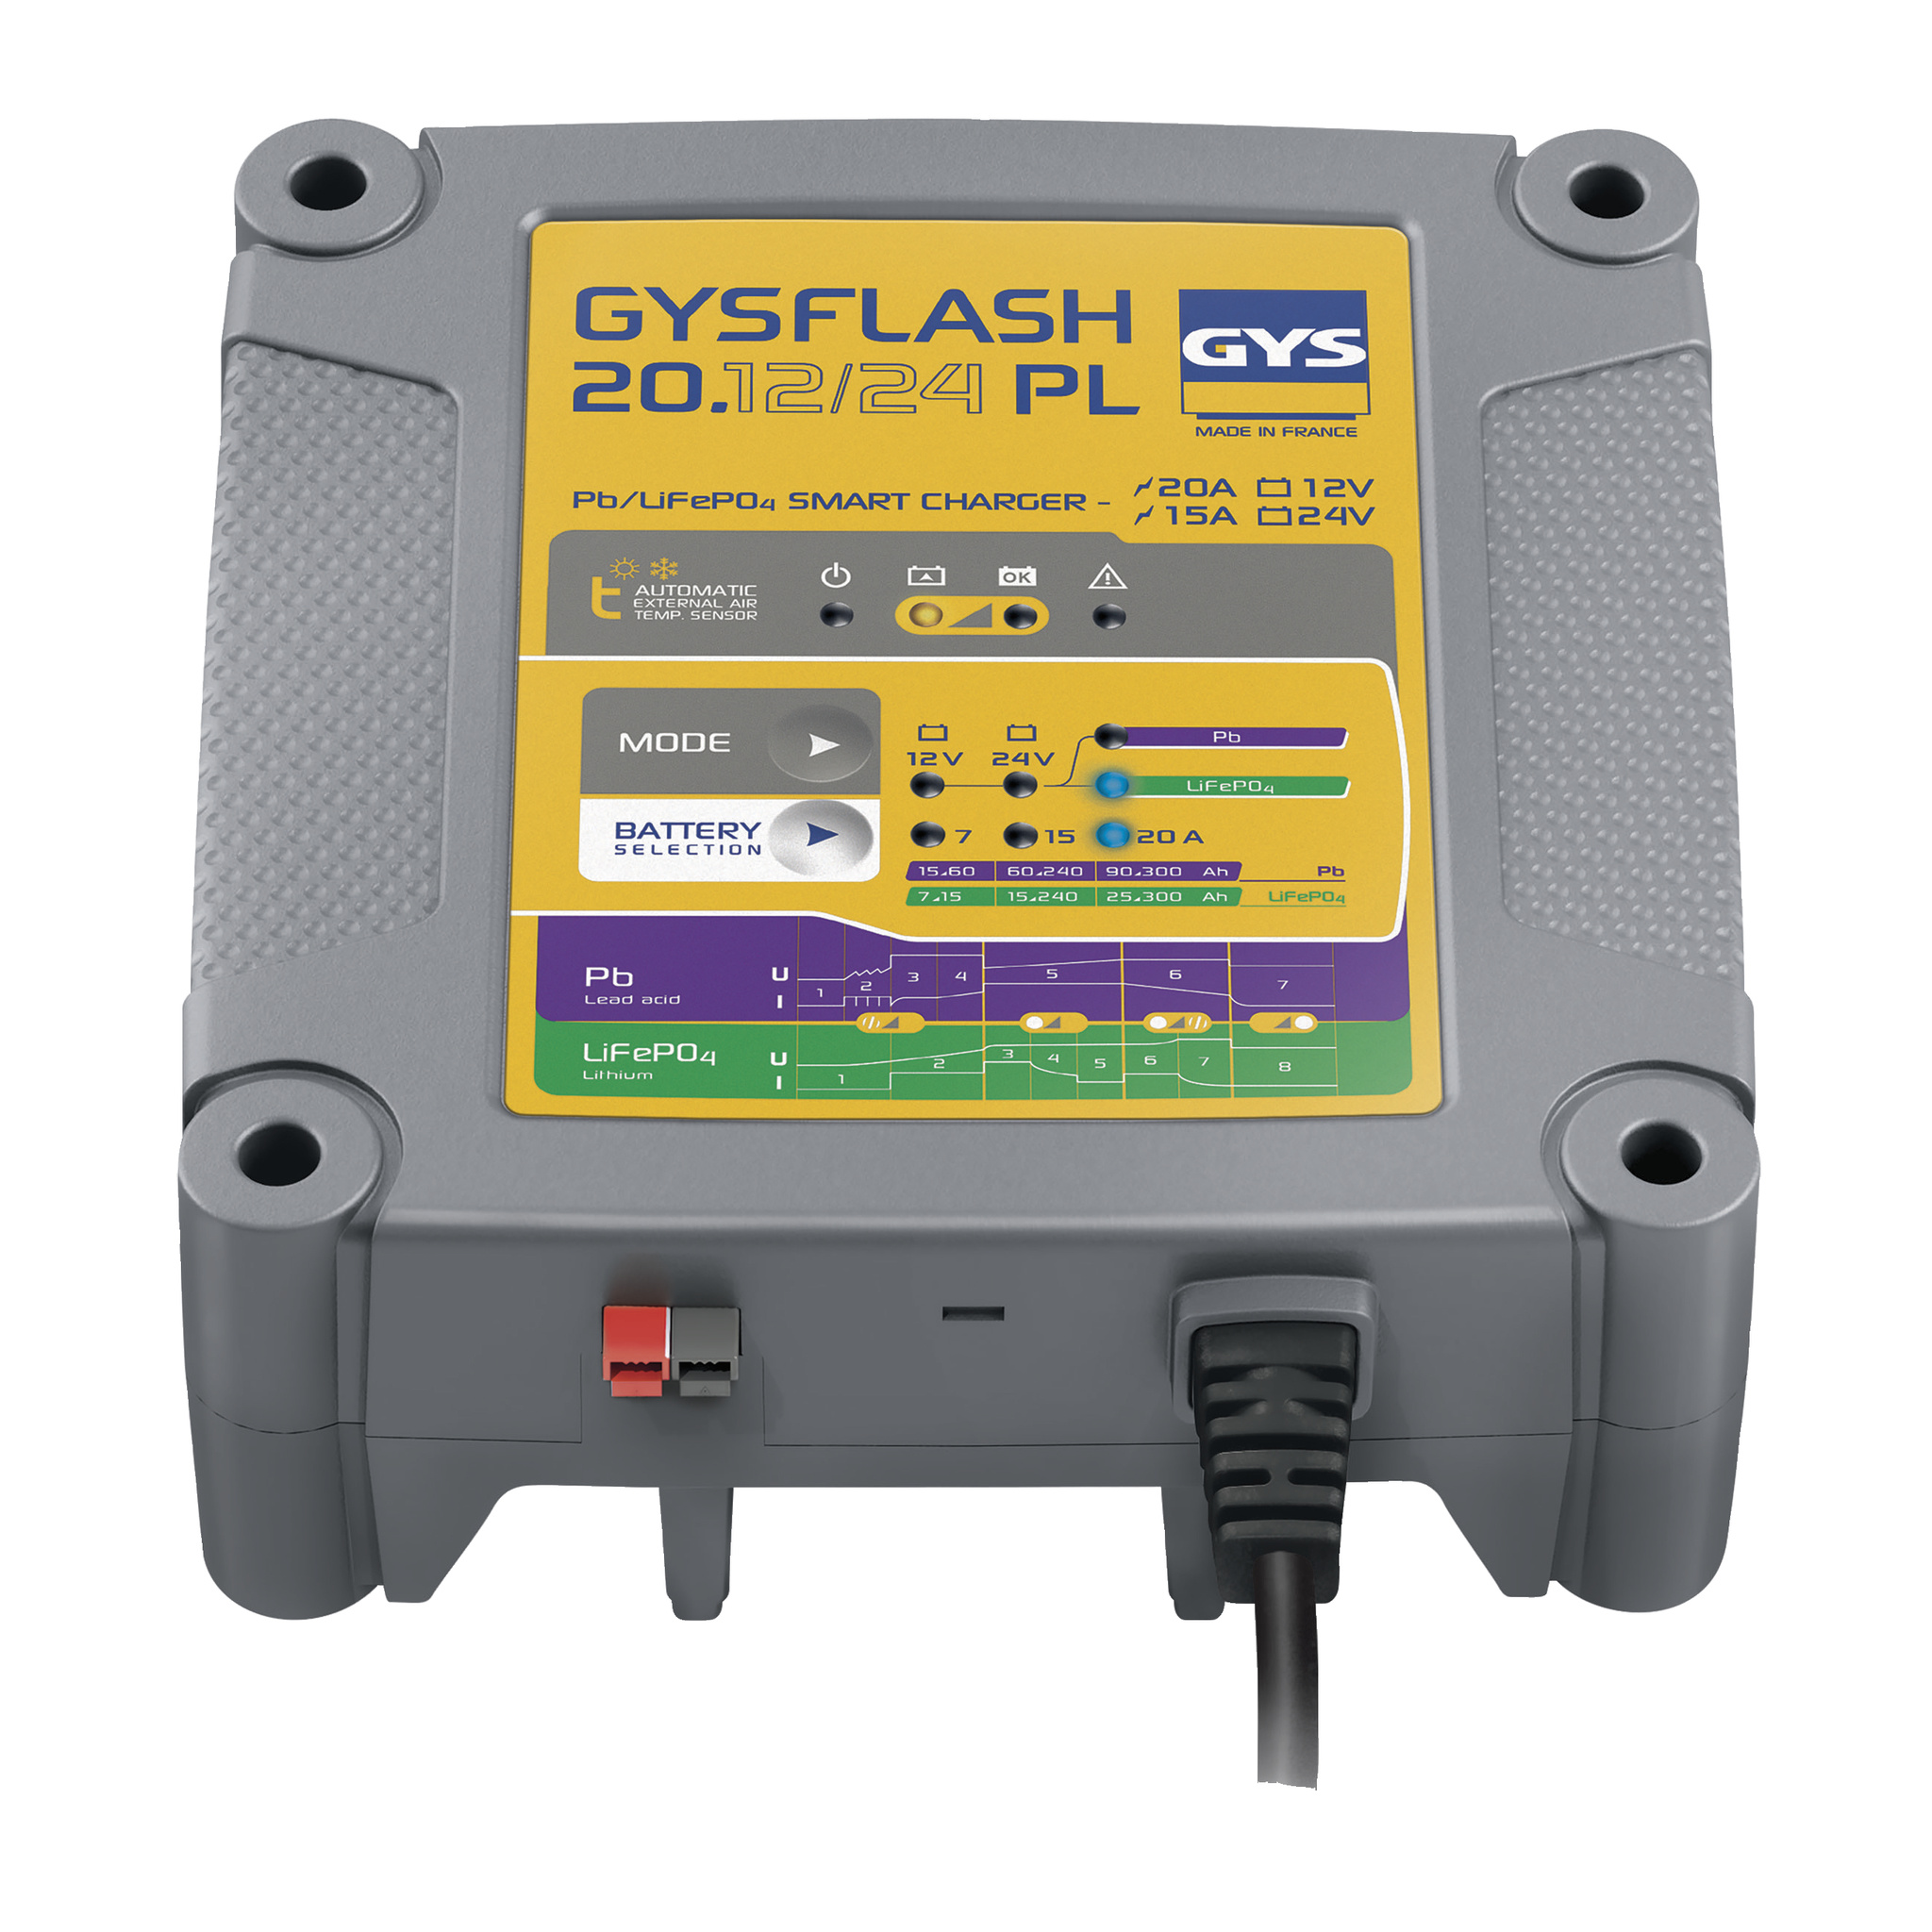 Nauwkeurigheid Ass dempen GYSFLASH 20.12/24 PL: acculader 12/24V | loodzuur + lithium, 4 modules -  Acculaders.nl